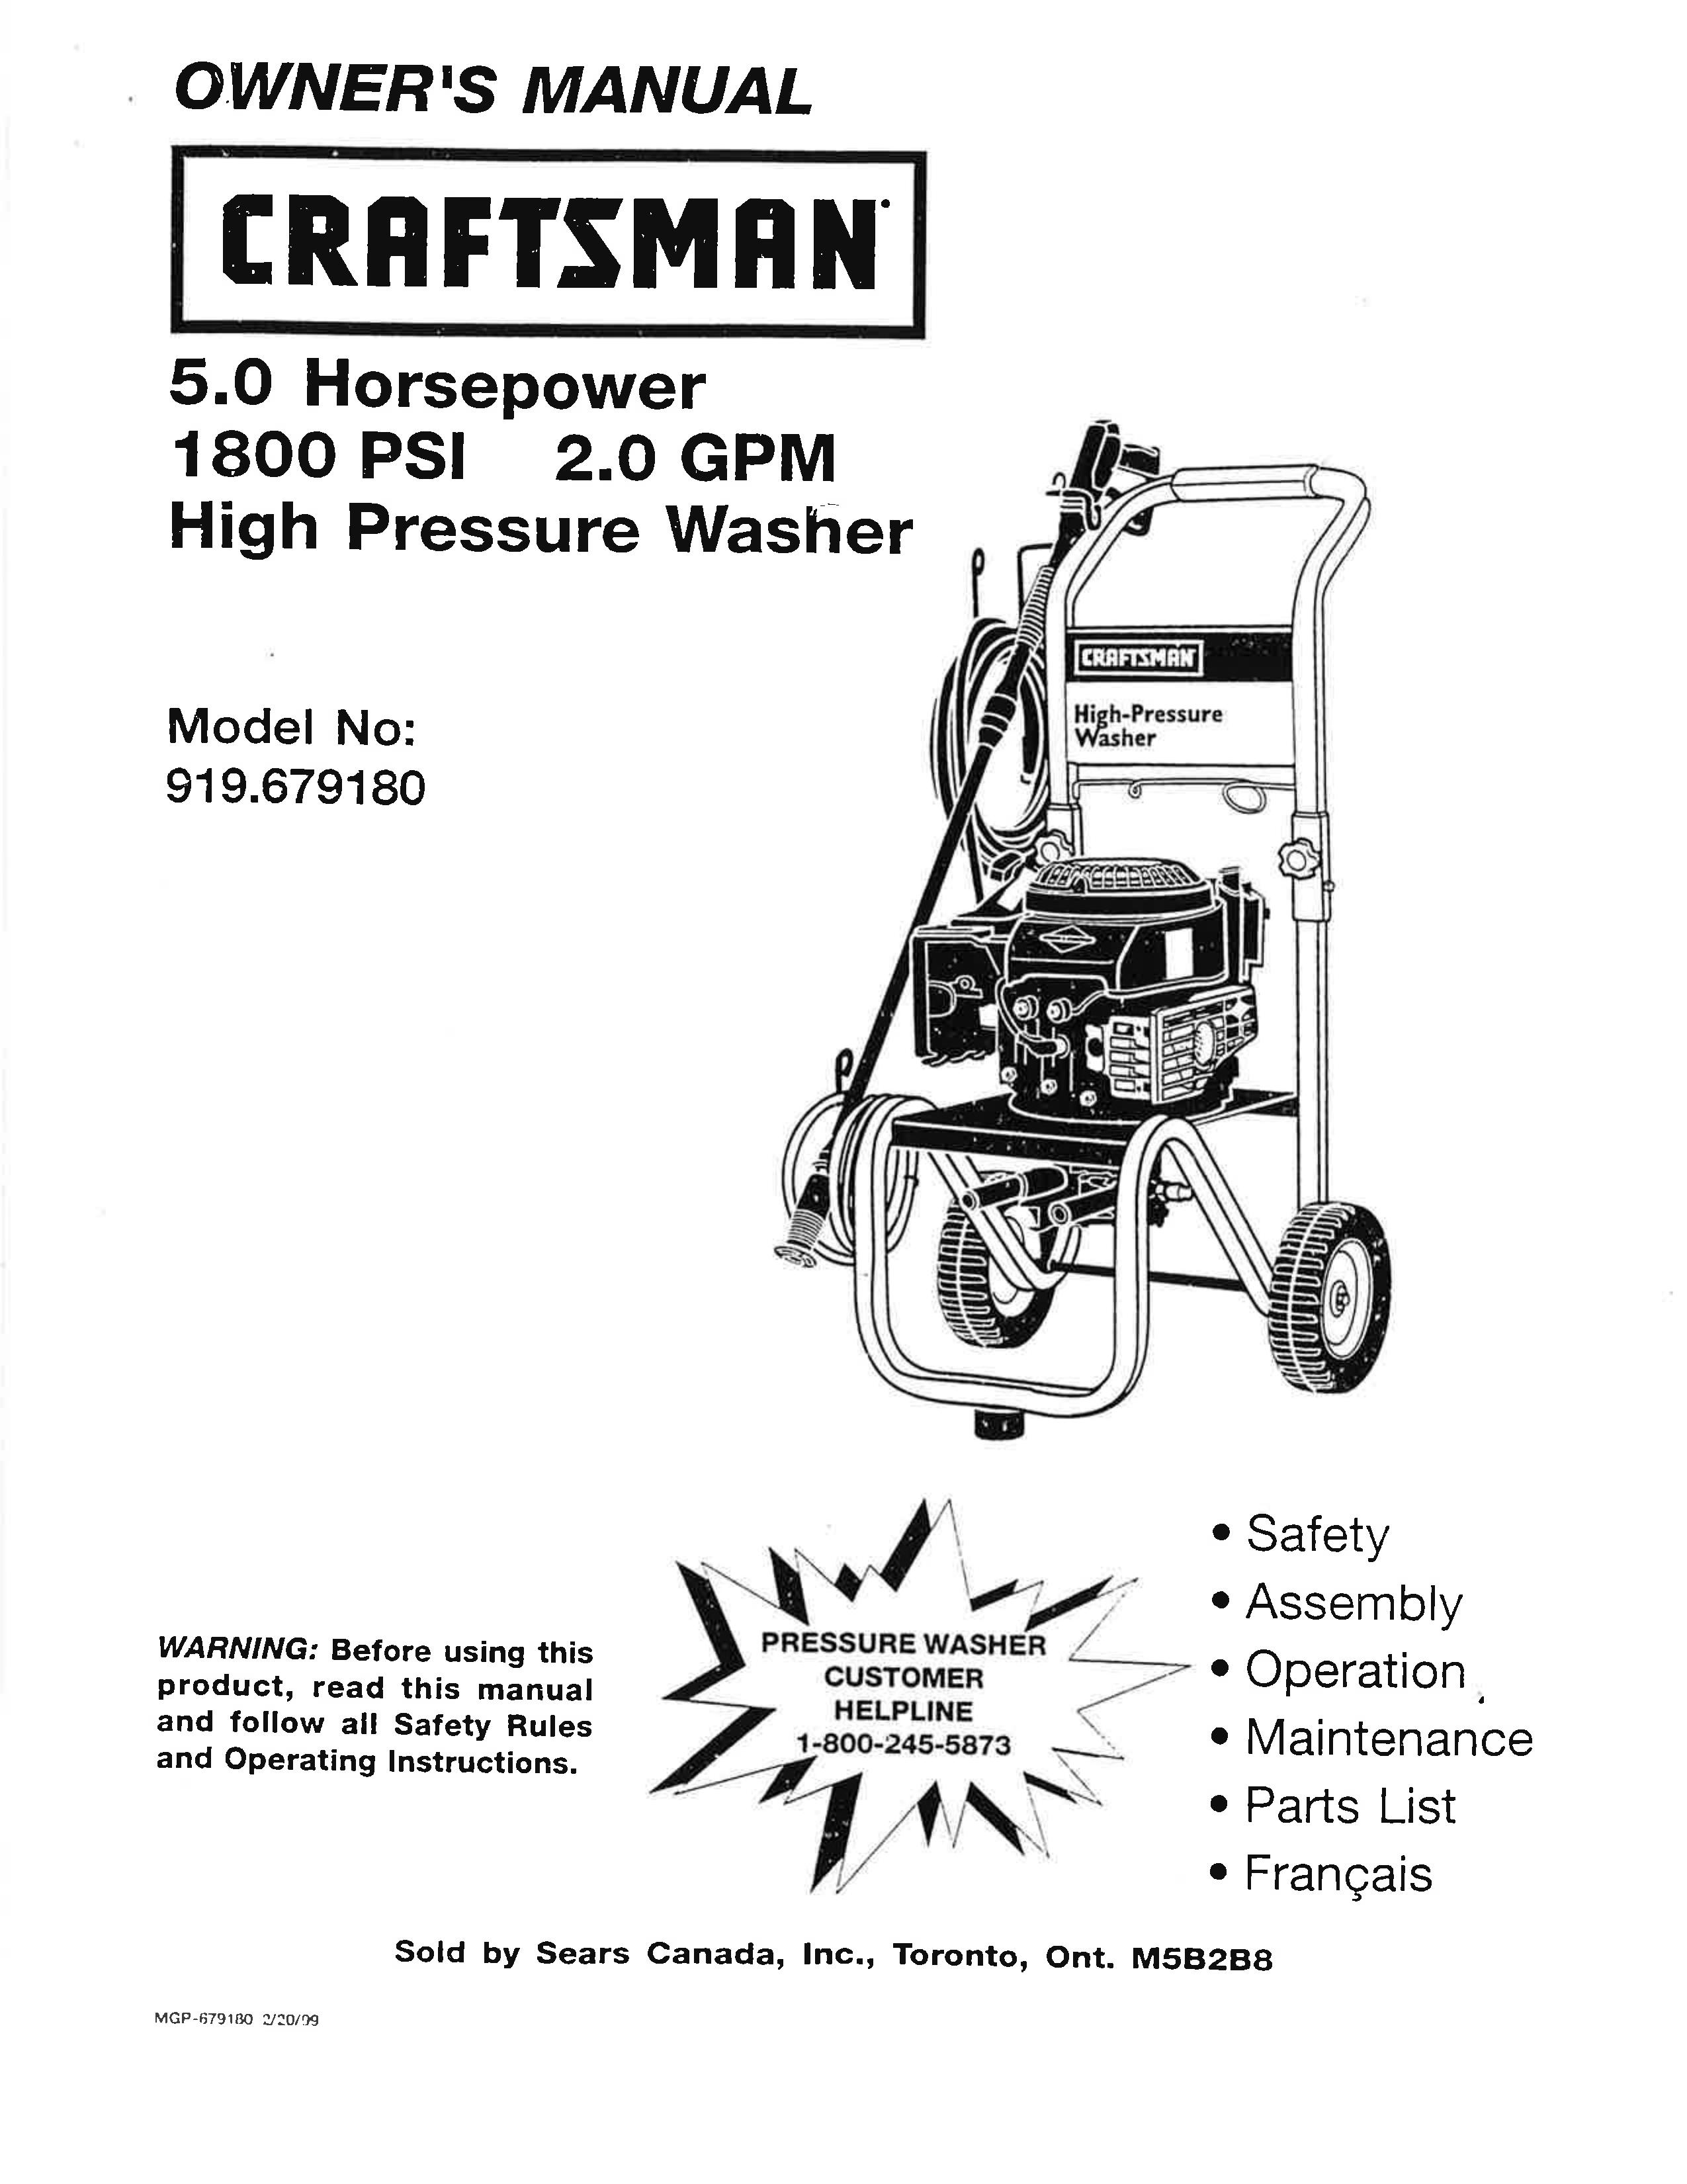 Craftsman 919.679180 Pressure Washer User Manual